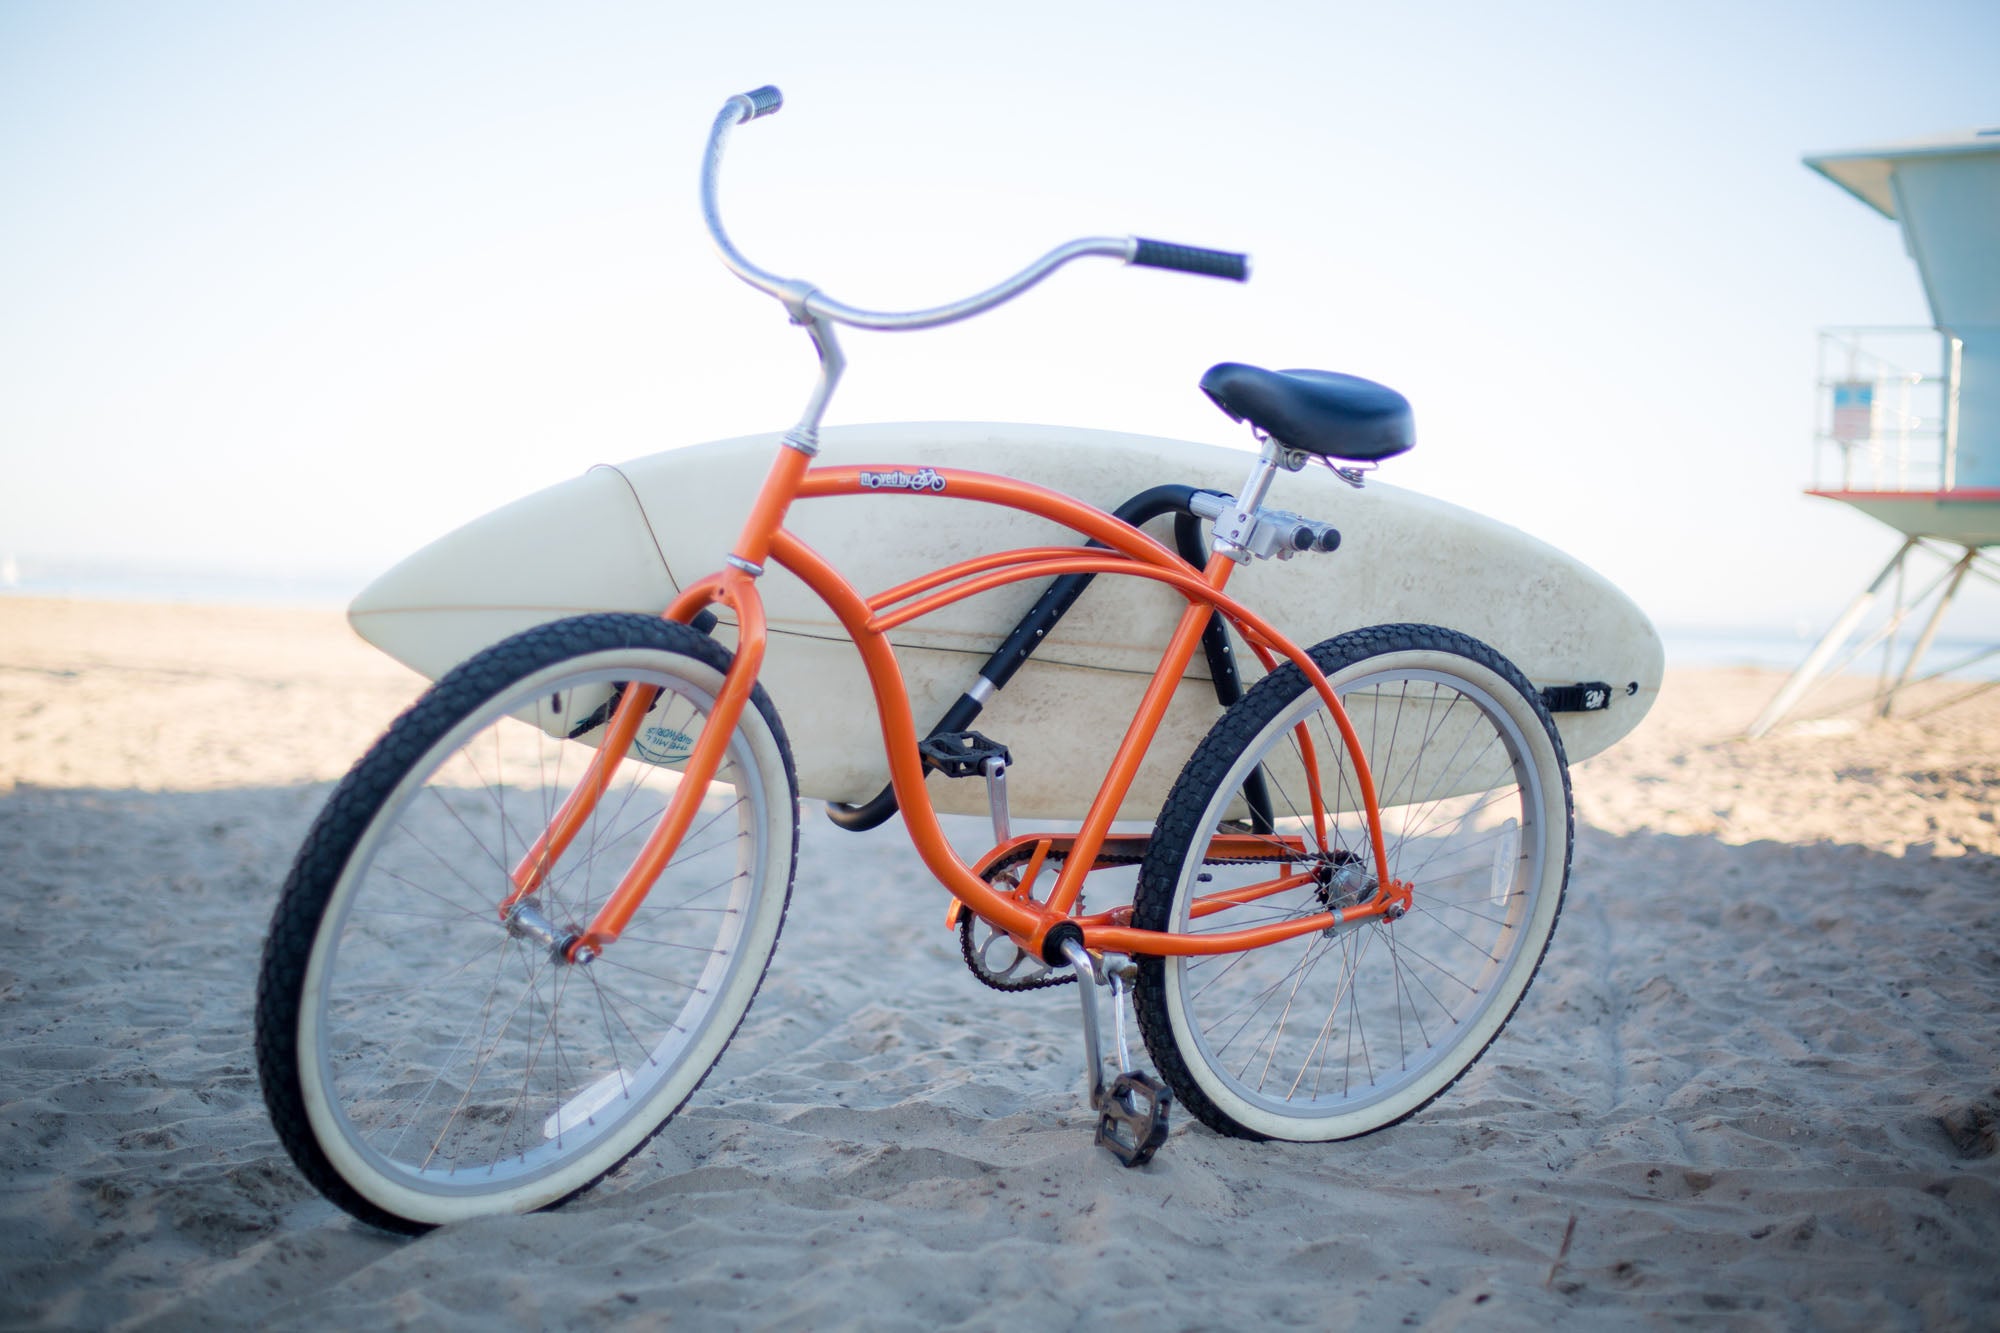 An orange bike on a beach with an MBB shortboard rack carrying a shortboard